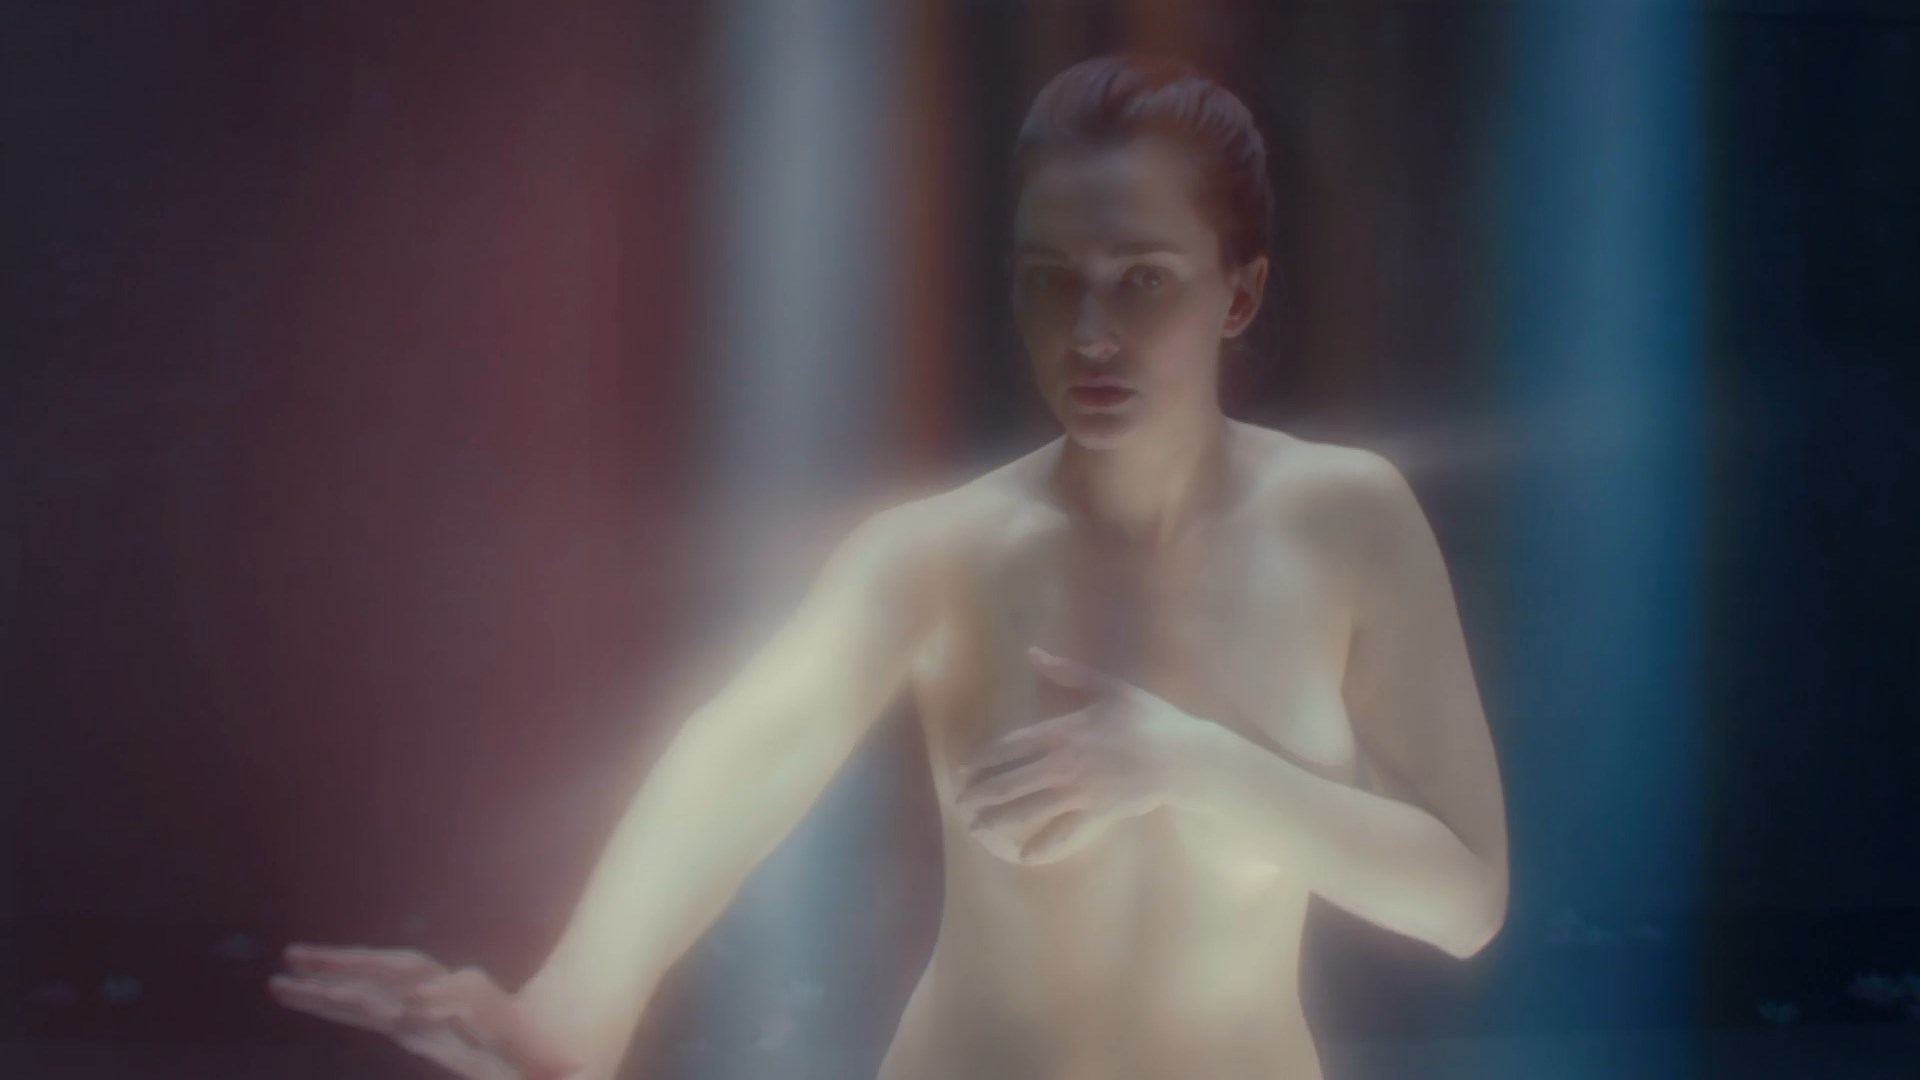 Katherine Barrell Hd Xxx Video - Nude video celebs Â» Katherine Barrell nude, Dominique Provost-Chalkley nude  - Wynonna Earp s04e02 (2020)